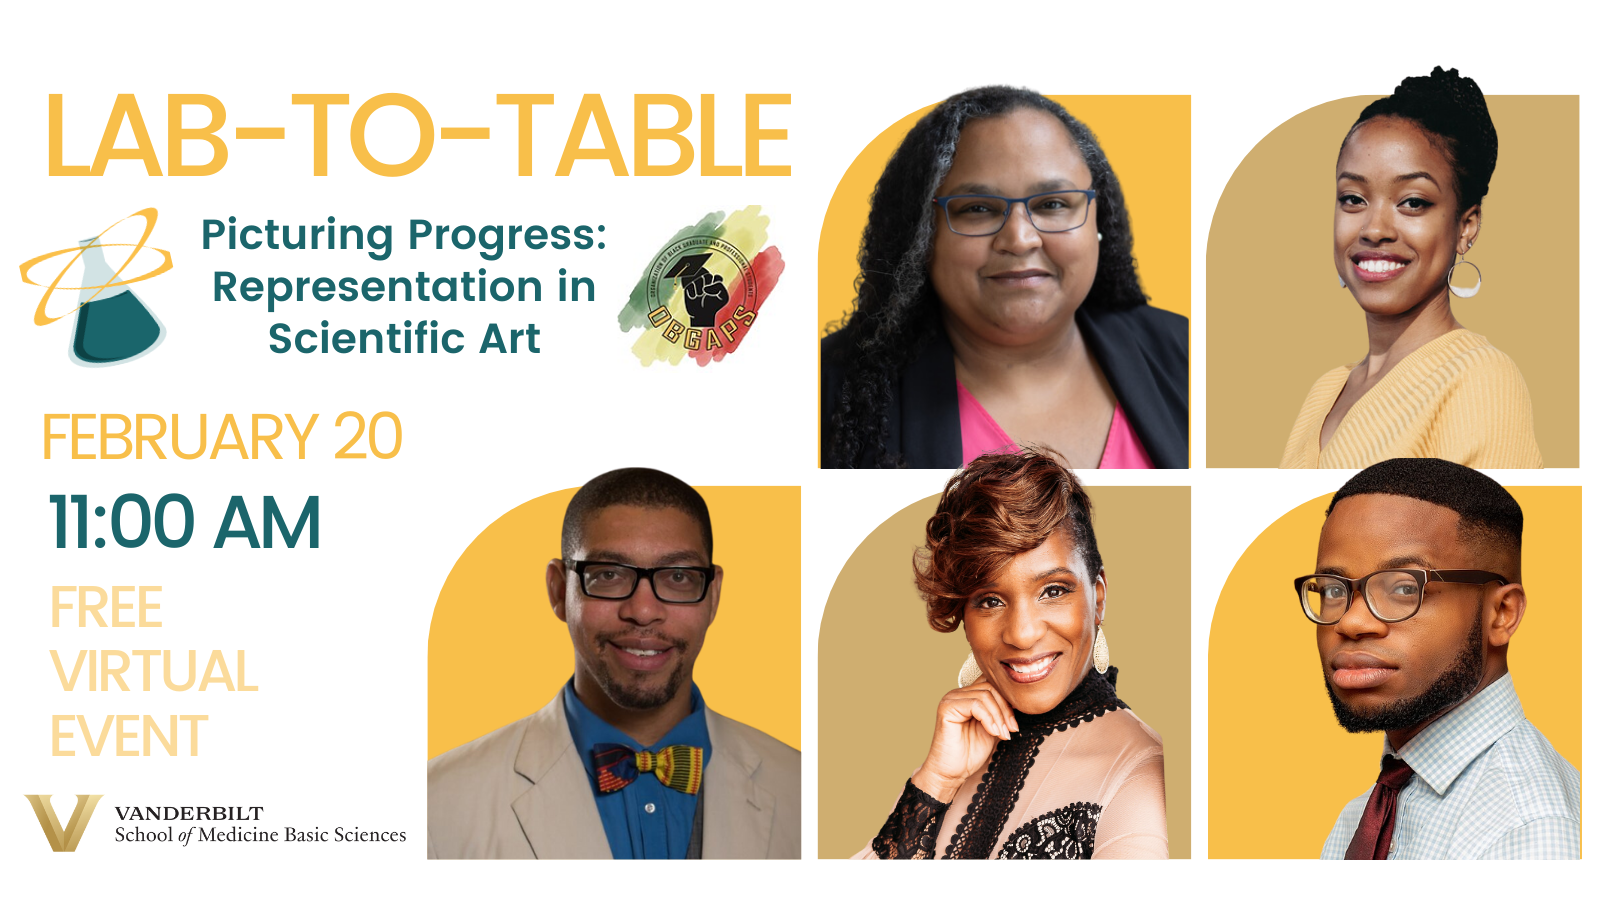 Lab-to-Table Conversation: ‘Picturing Progress: Representation in Scientific Art’ is Feb. 20